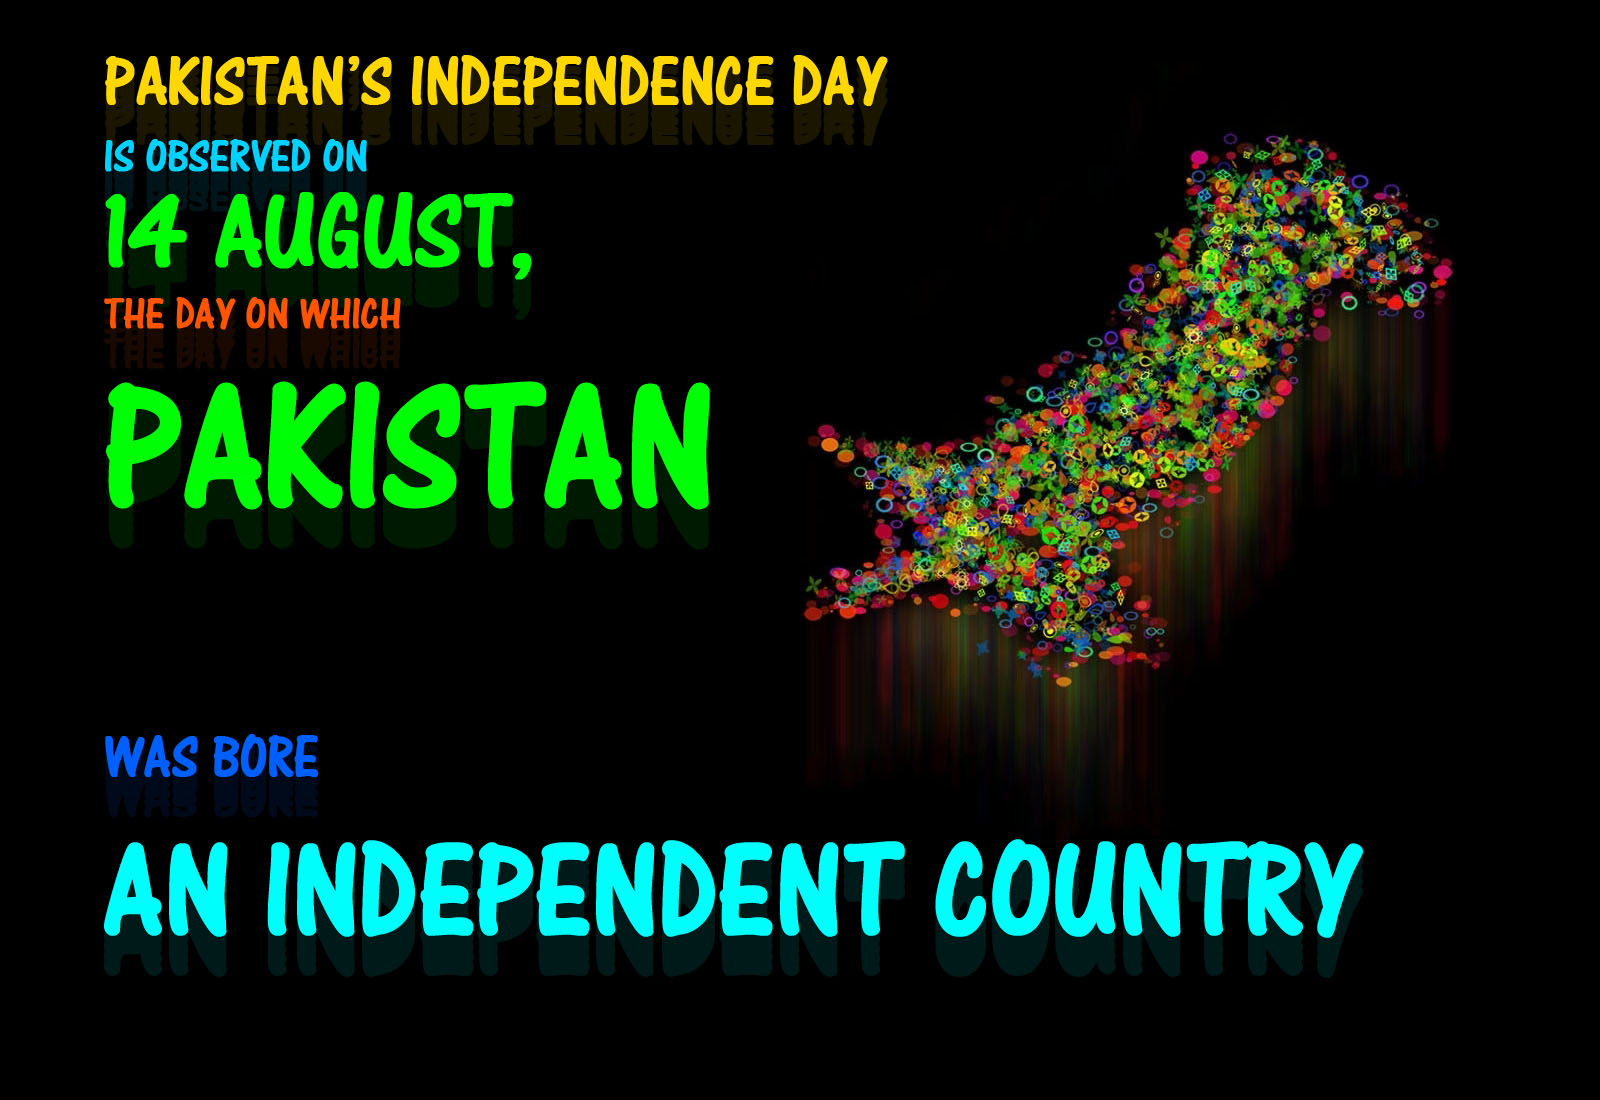 https://blogger.googleusercontent.com/img/b/R29vZ2xl/AVvXsEjIg9r0idWeSeylKkj4EExb_tfGmmxXap6SrKsqVPj1OhxyuIUHb0TxQu82wM1M81NiQhbd8l5oSiFsF9C5bc7Zo3v3ThNVrGbfL60DoBPayEna3gTg99k9peWb3UXIg12SYKyvffUejNcB/s1600/pakistan-independence-day-wallpaper-2012-4.jpg